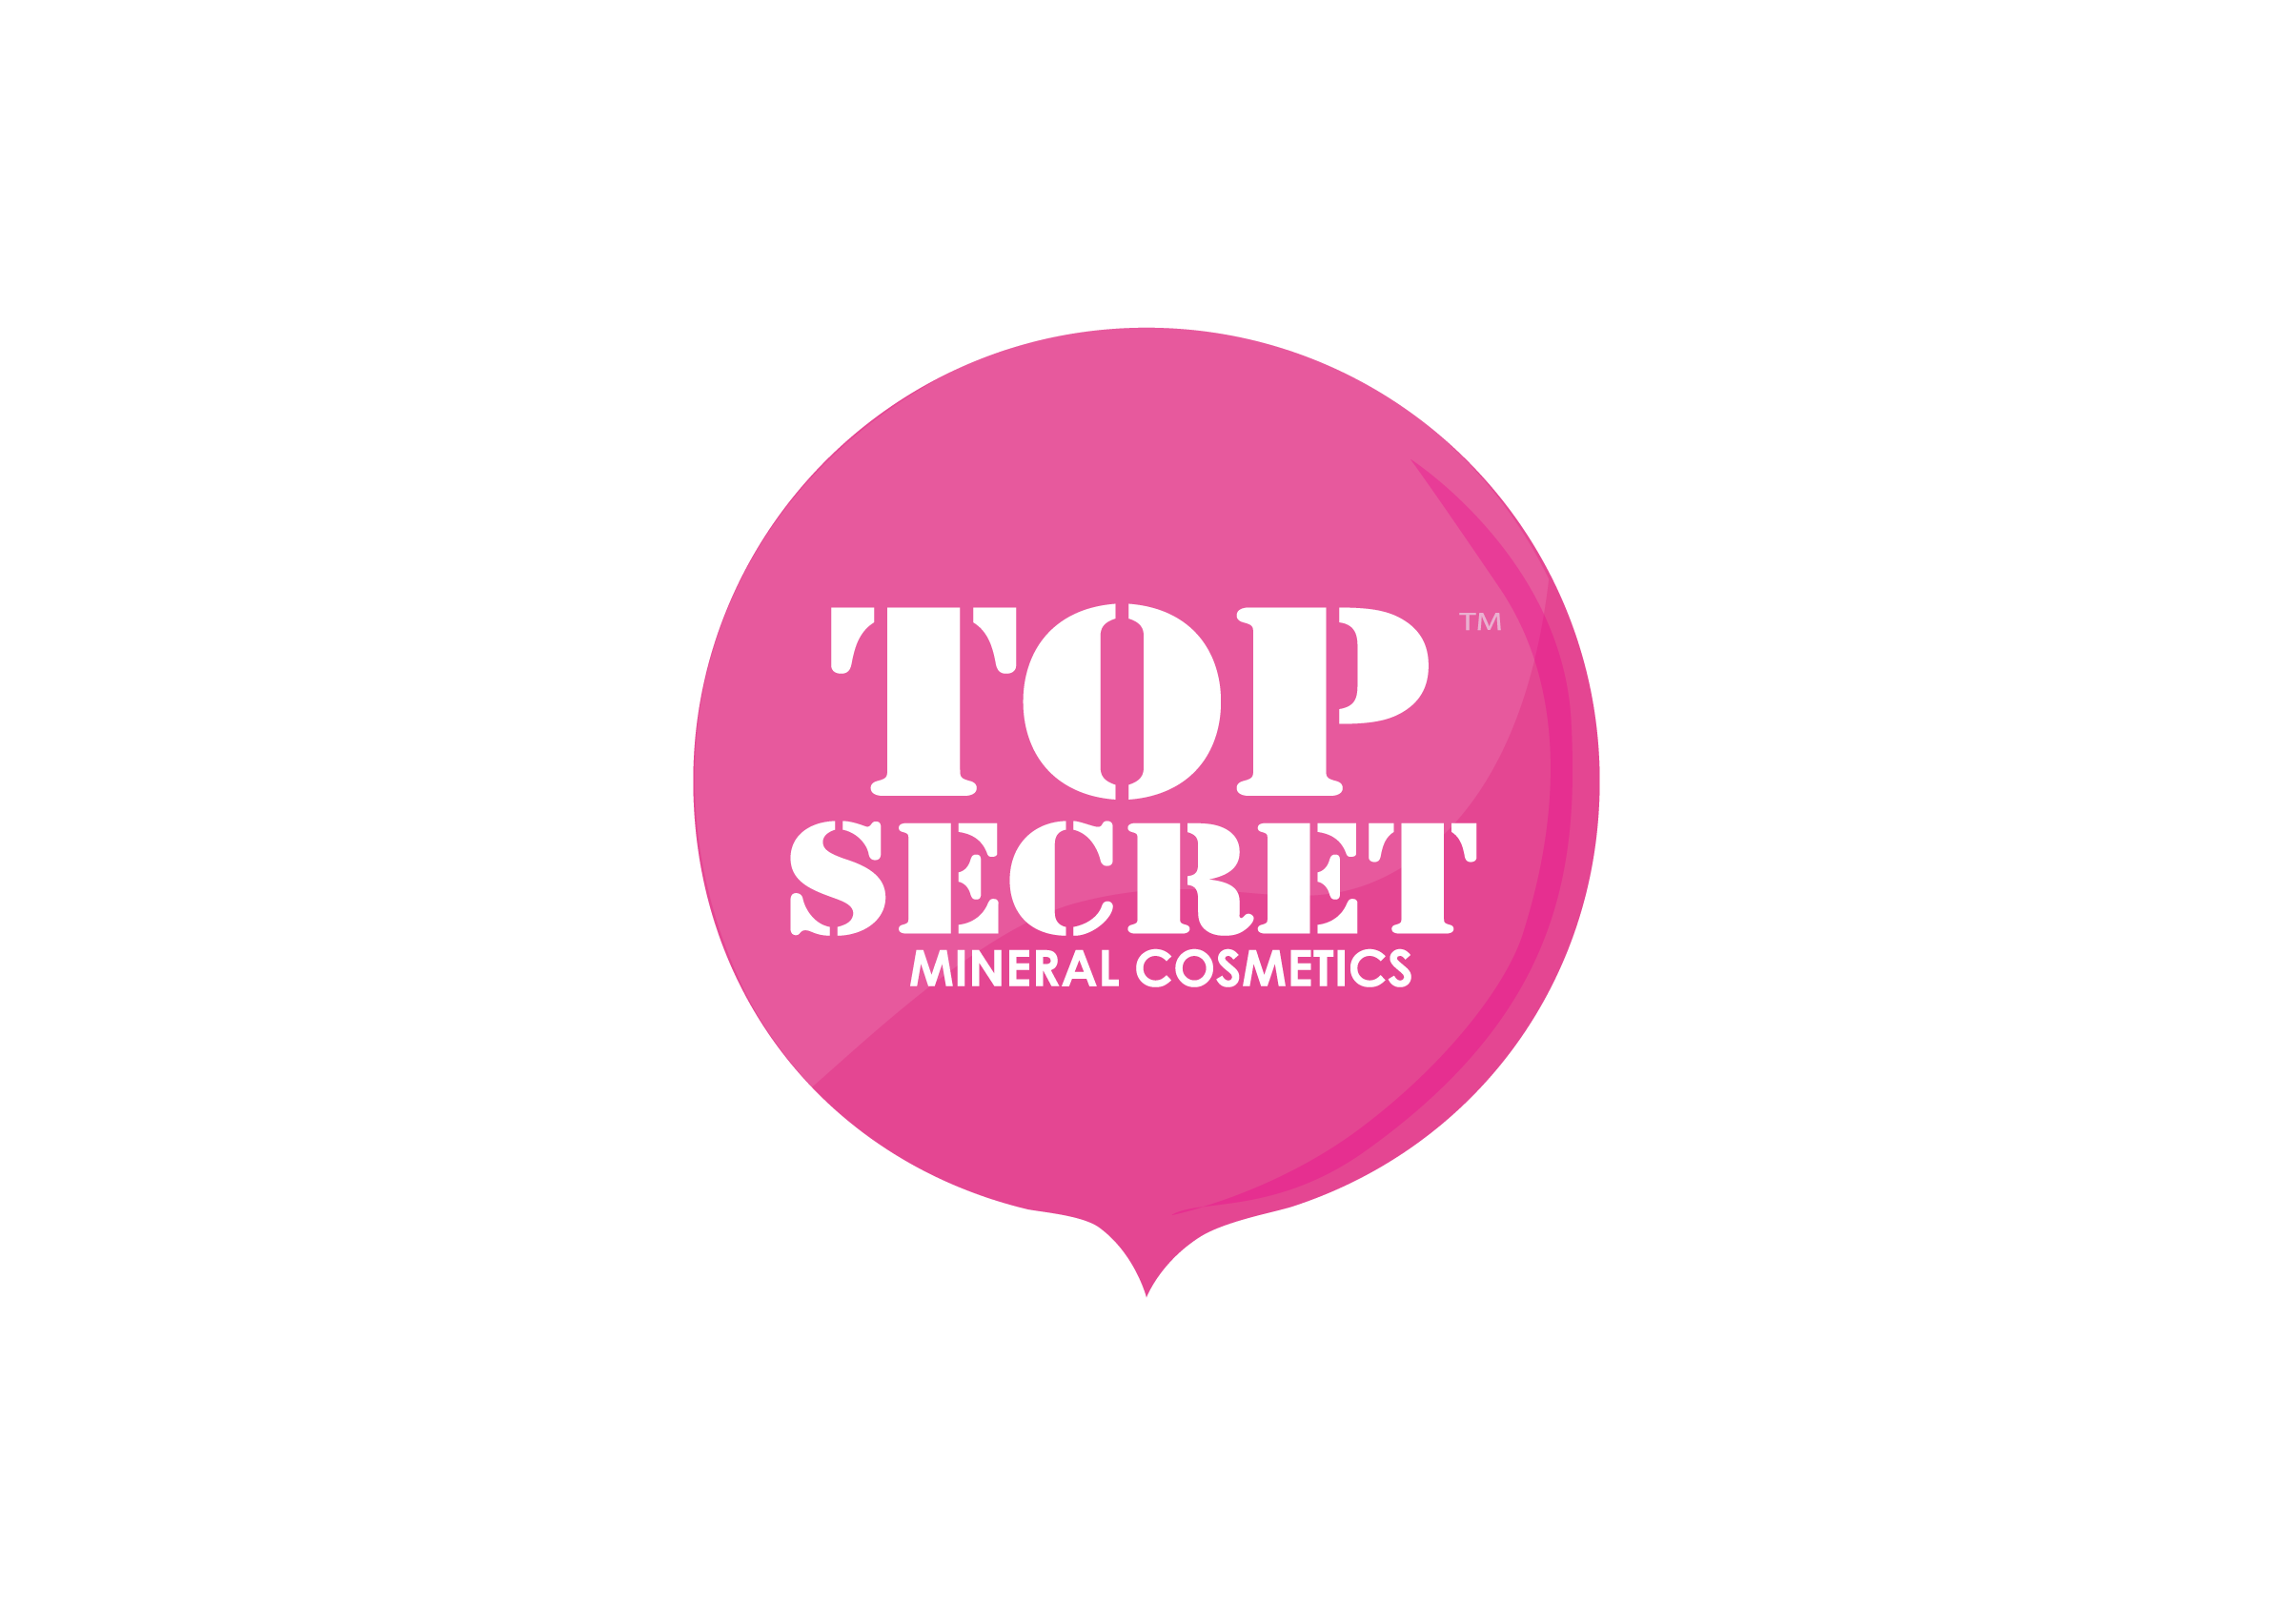 Top Secret Mineral Cosmetics Brand Identity